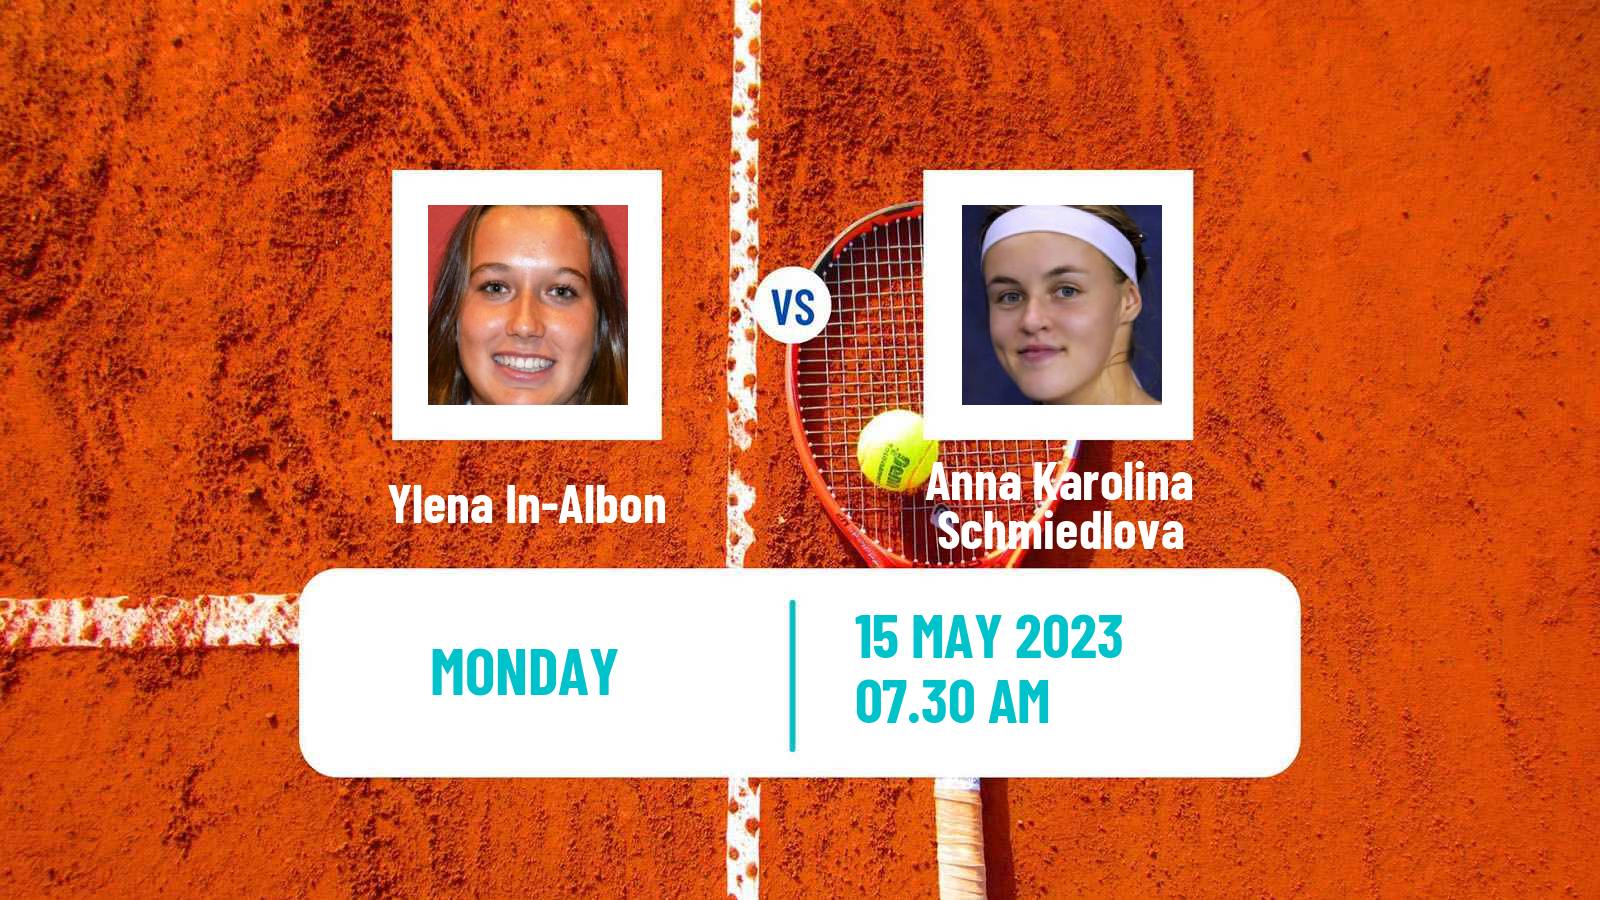 Tennis ATP Challenger Ylena In-Albon - Anna Karolina Schmiedlova